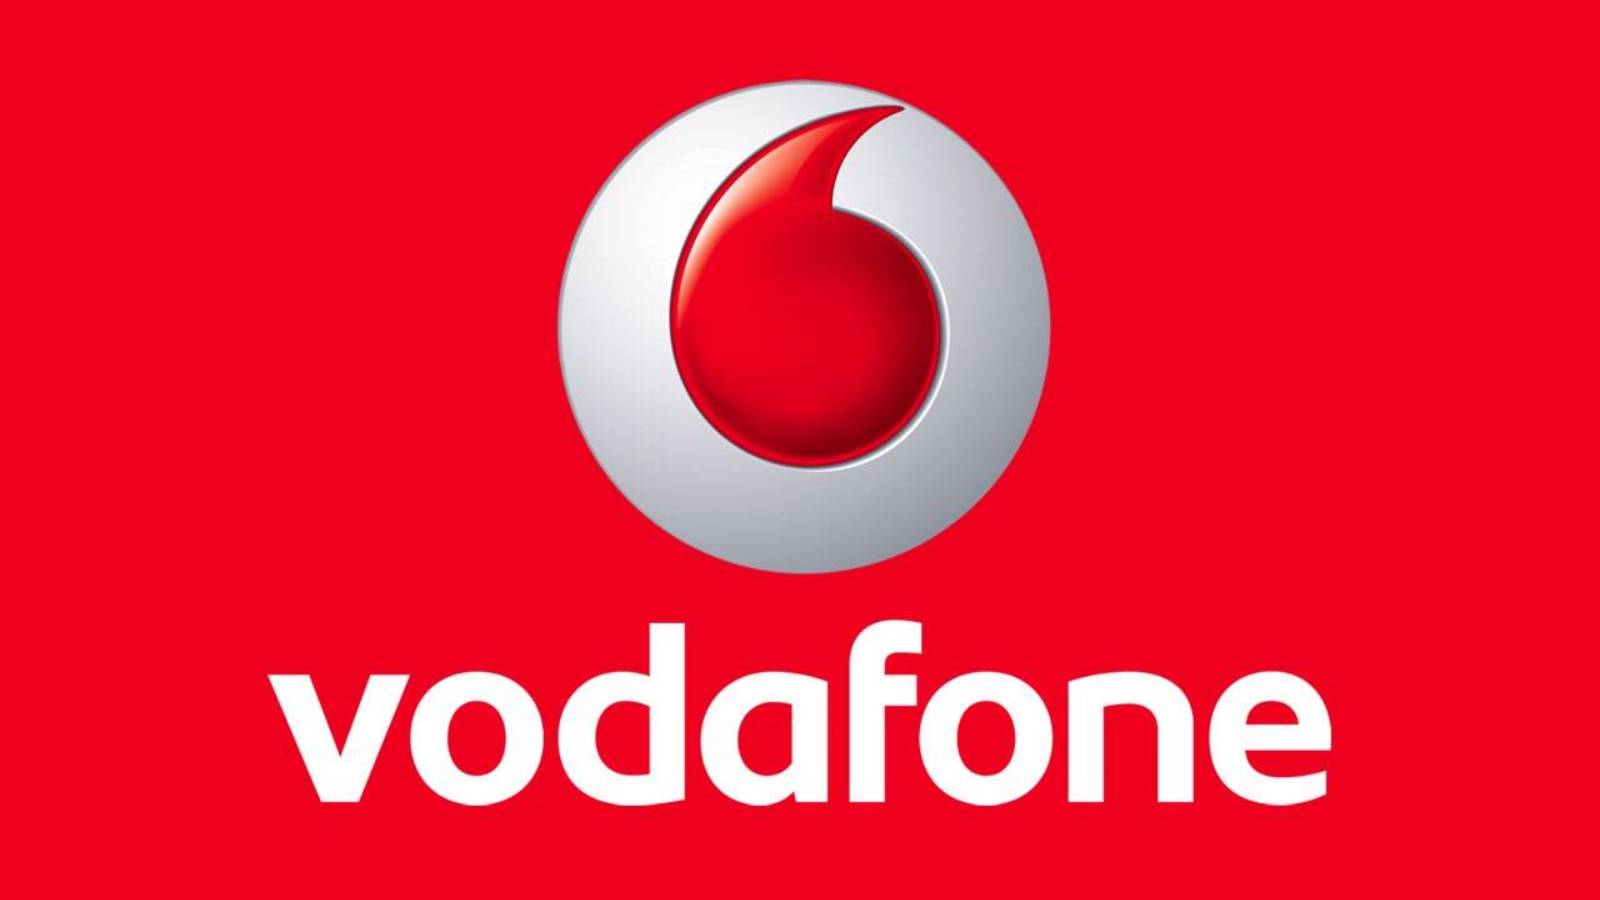 Hotararea Vodafone AVERTISMENT Clientii Toata Romania